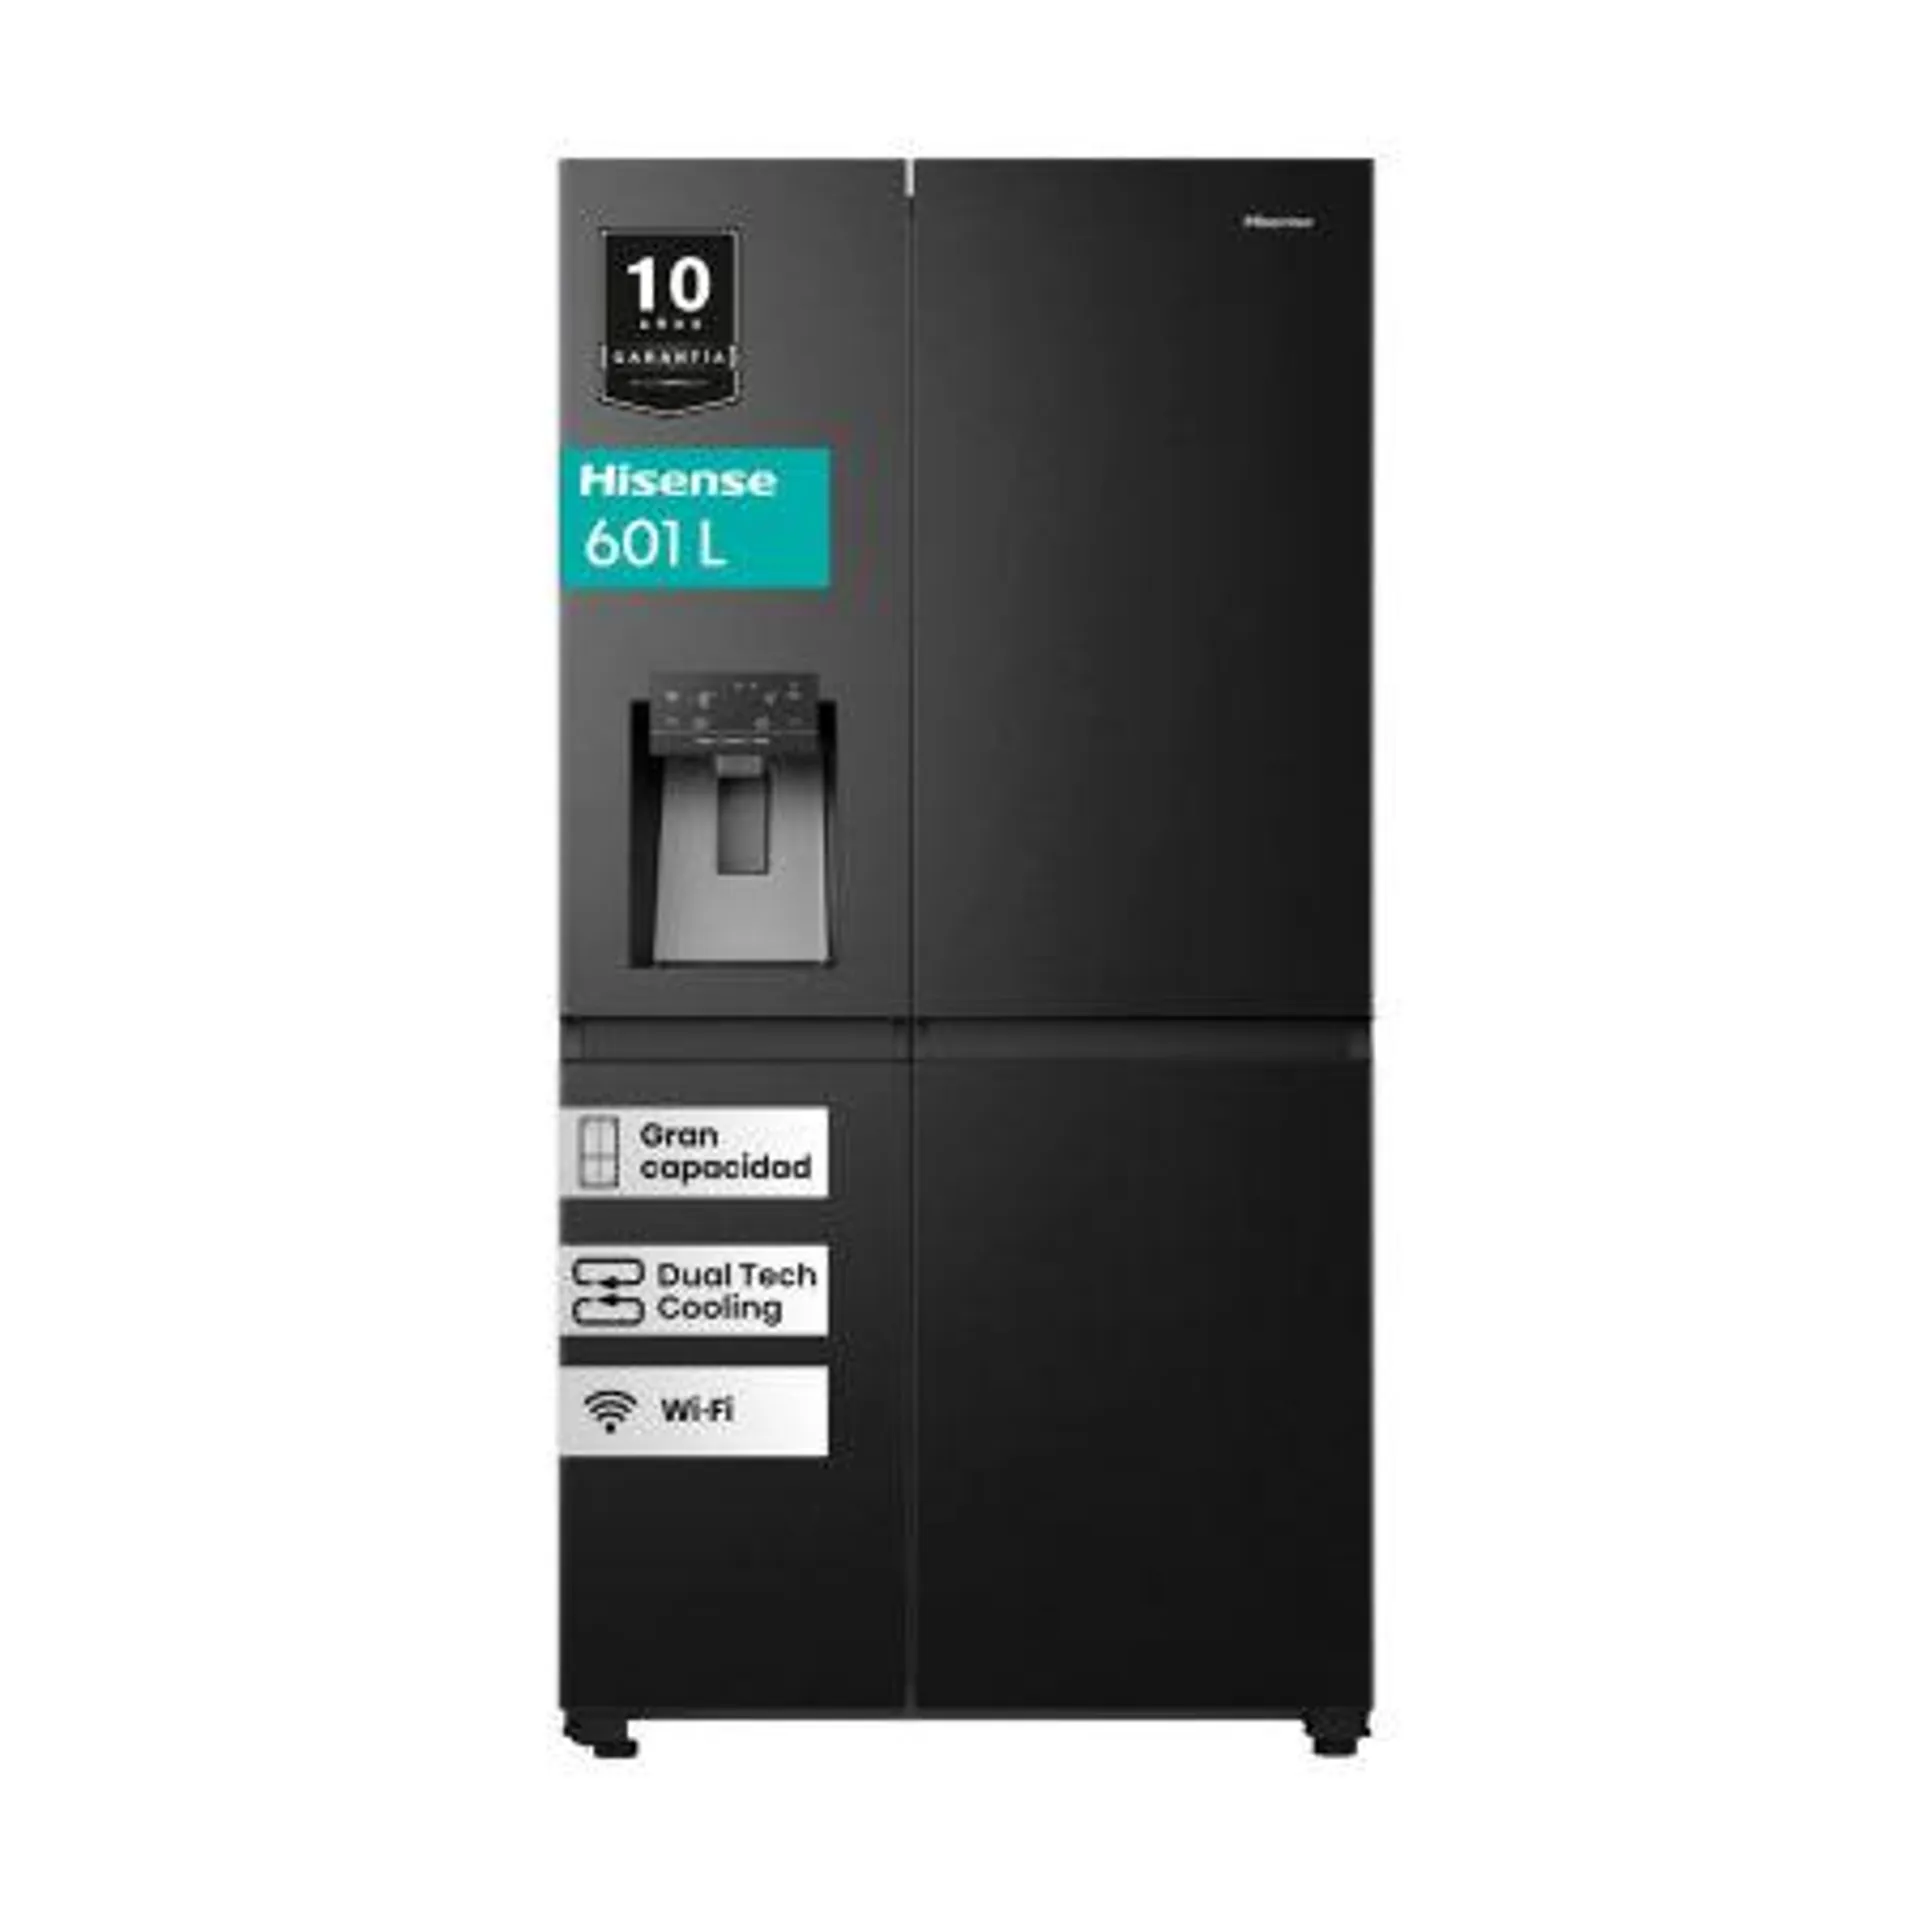 Refrigerador Hisense Side By Side No Frost / Rs781Bv 601 Litros